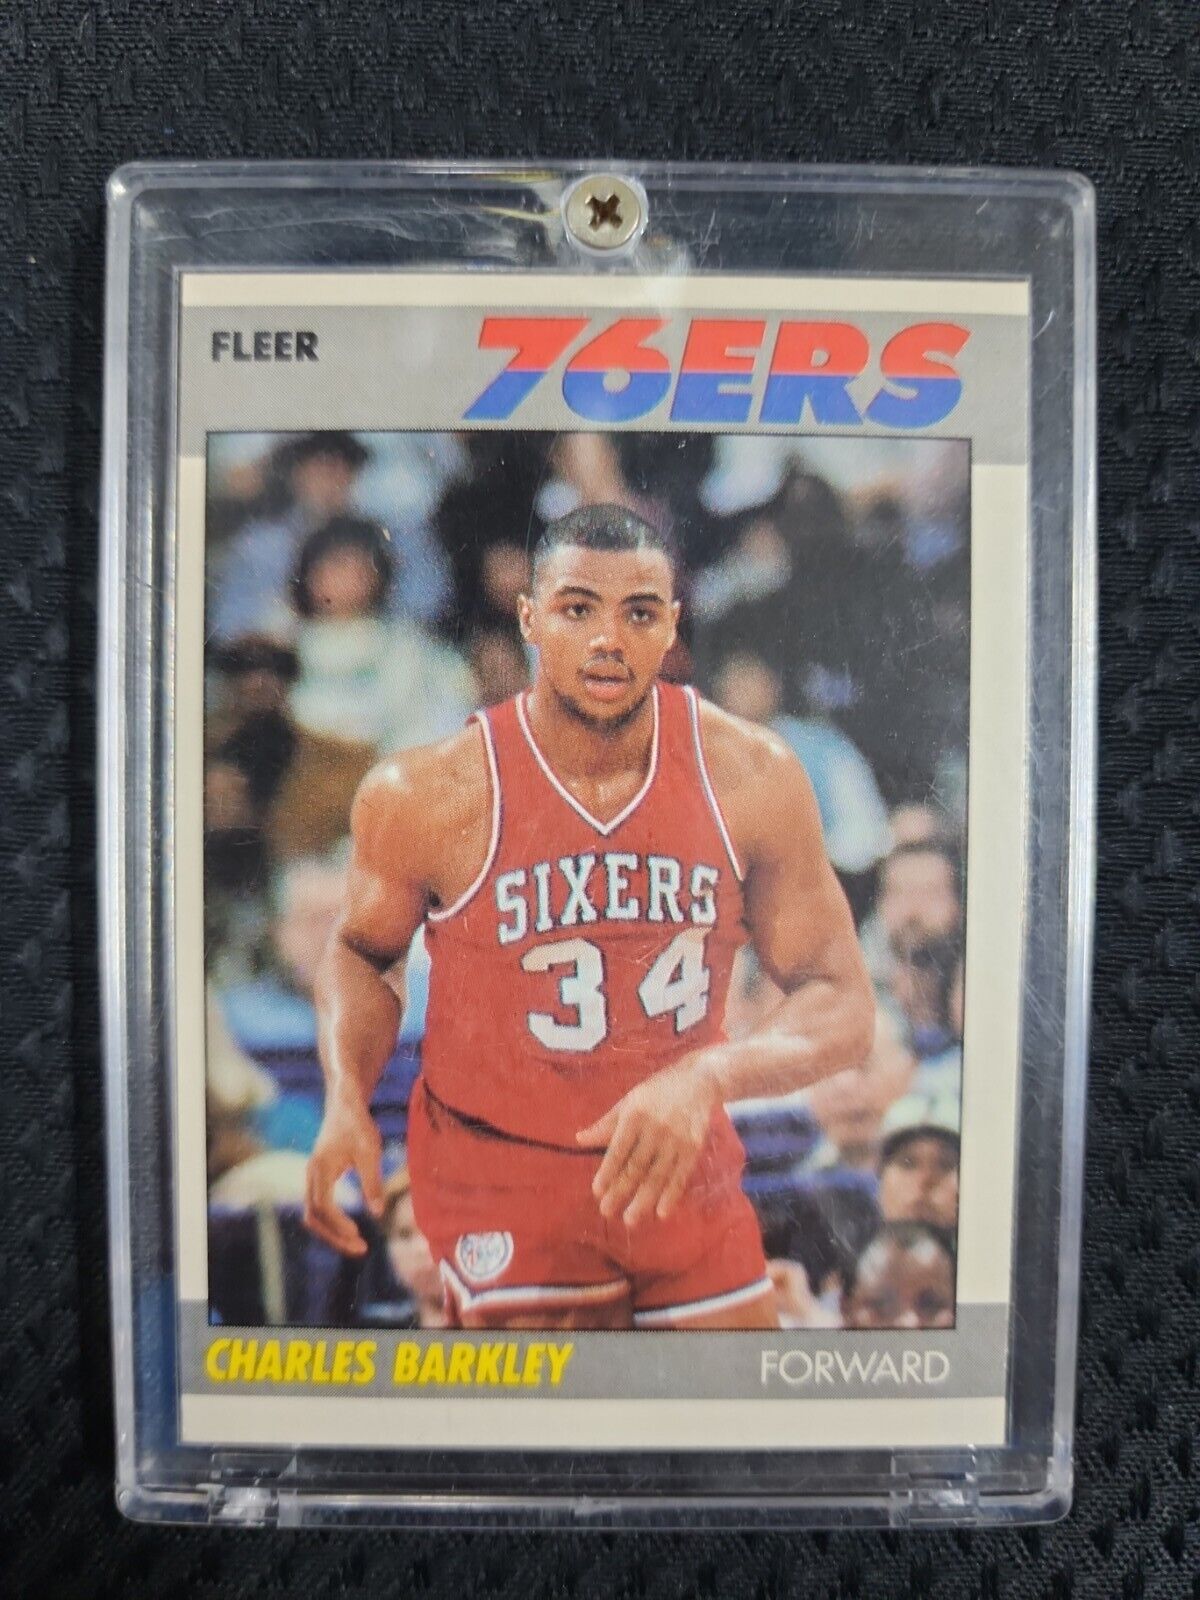 1987 Fleer Charles Barkley 9 of 132 USA Philadelphia 76ers Basketball Card